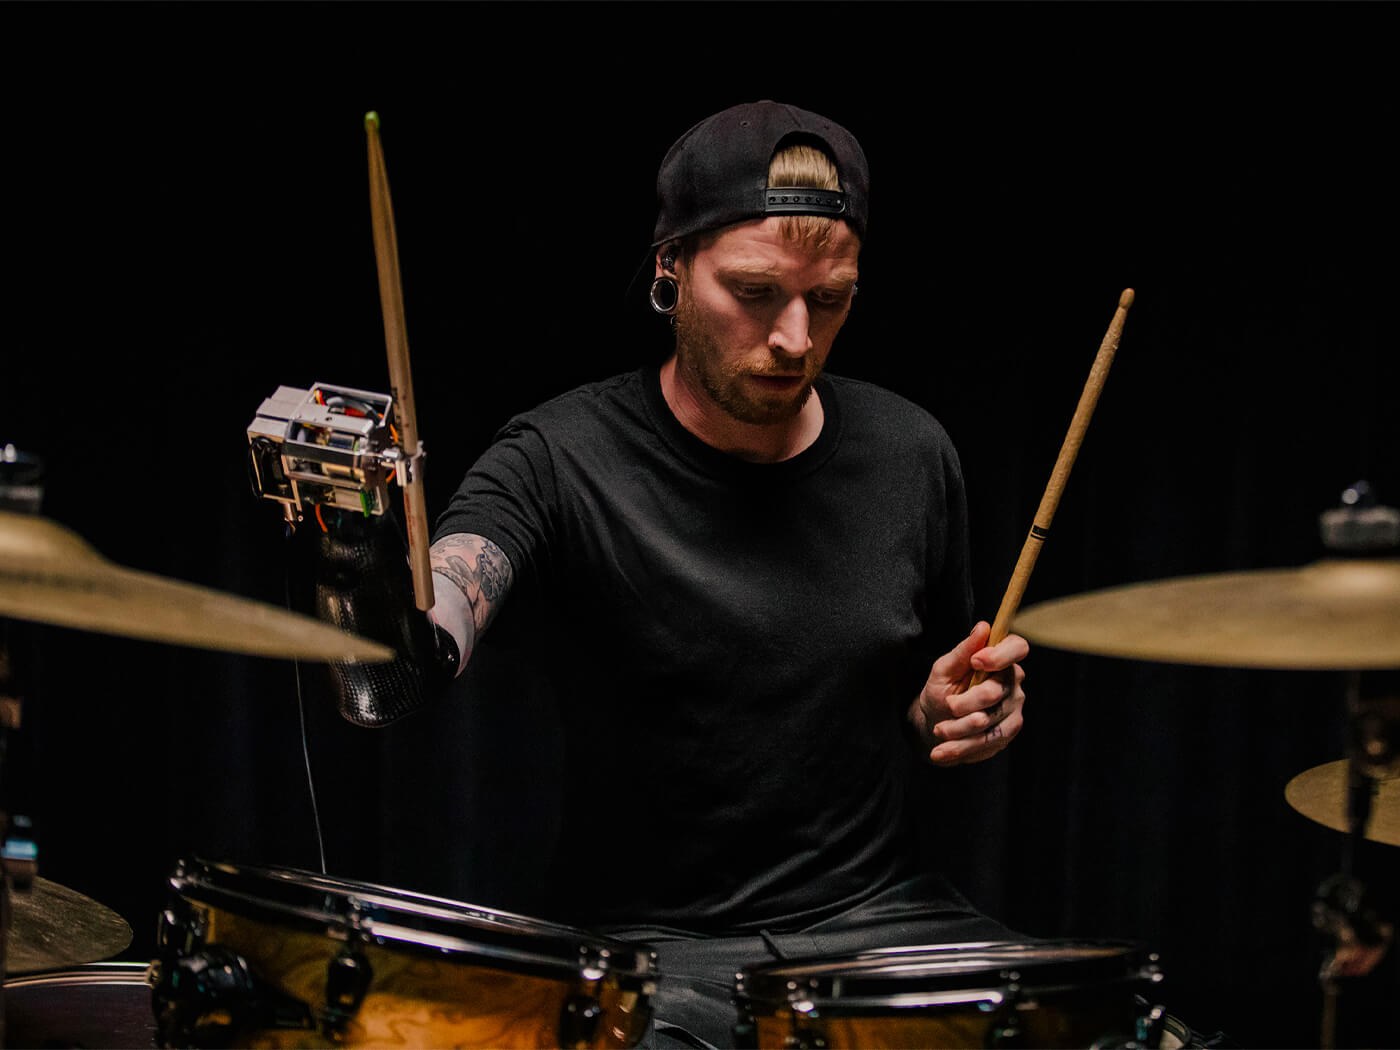 Jason Barnes drumming